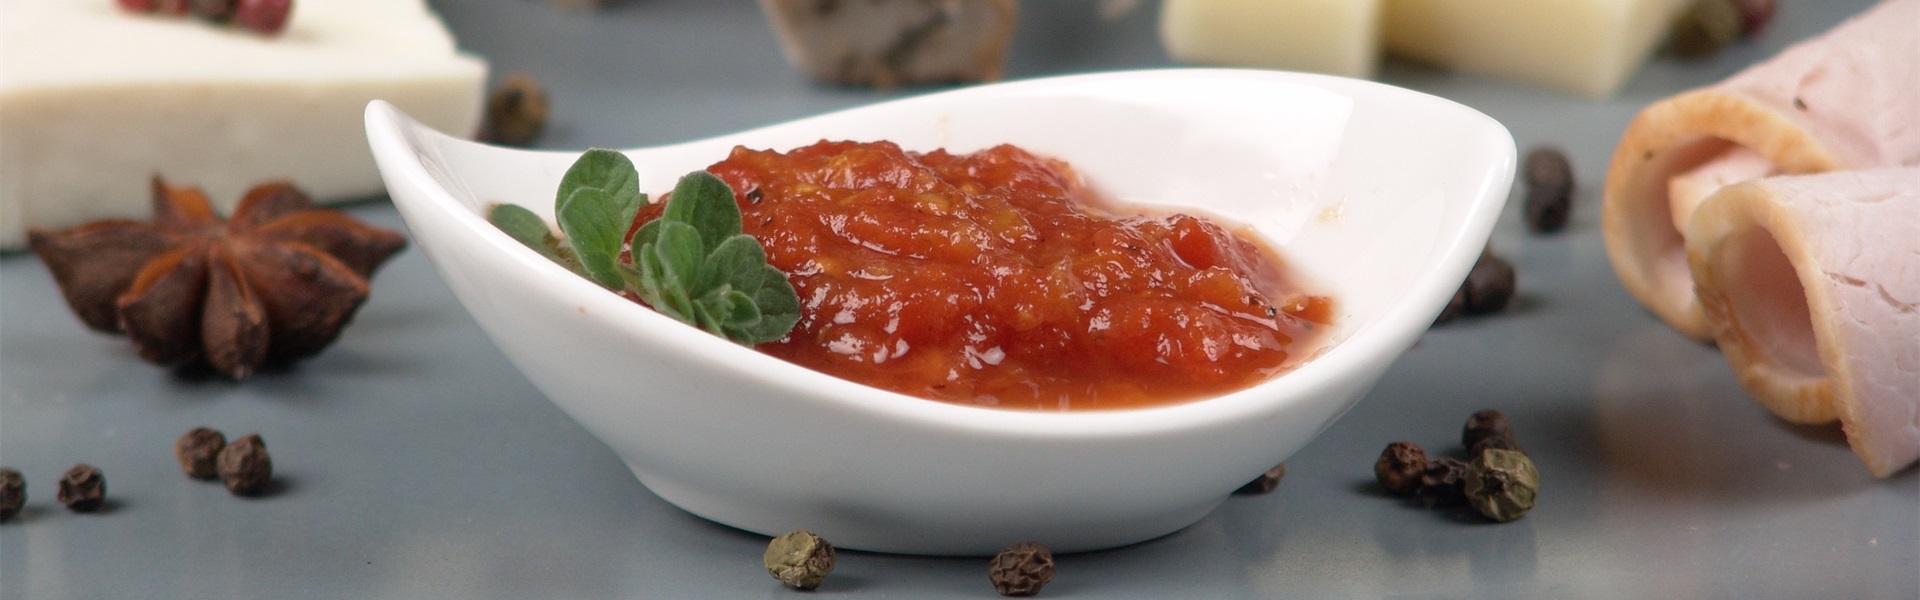 Recipe for spicy tomato marmalade / jam